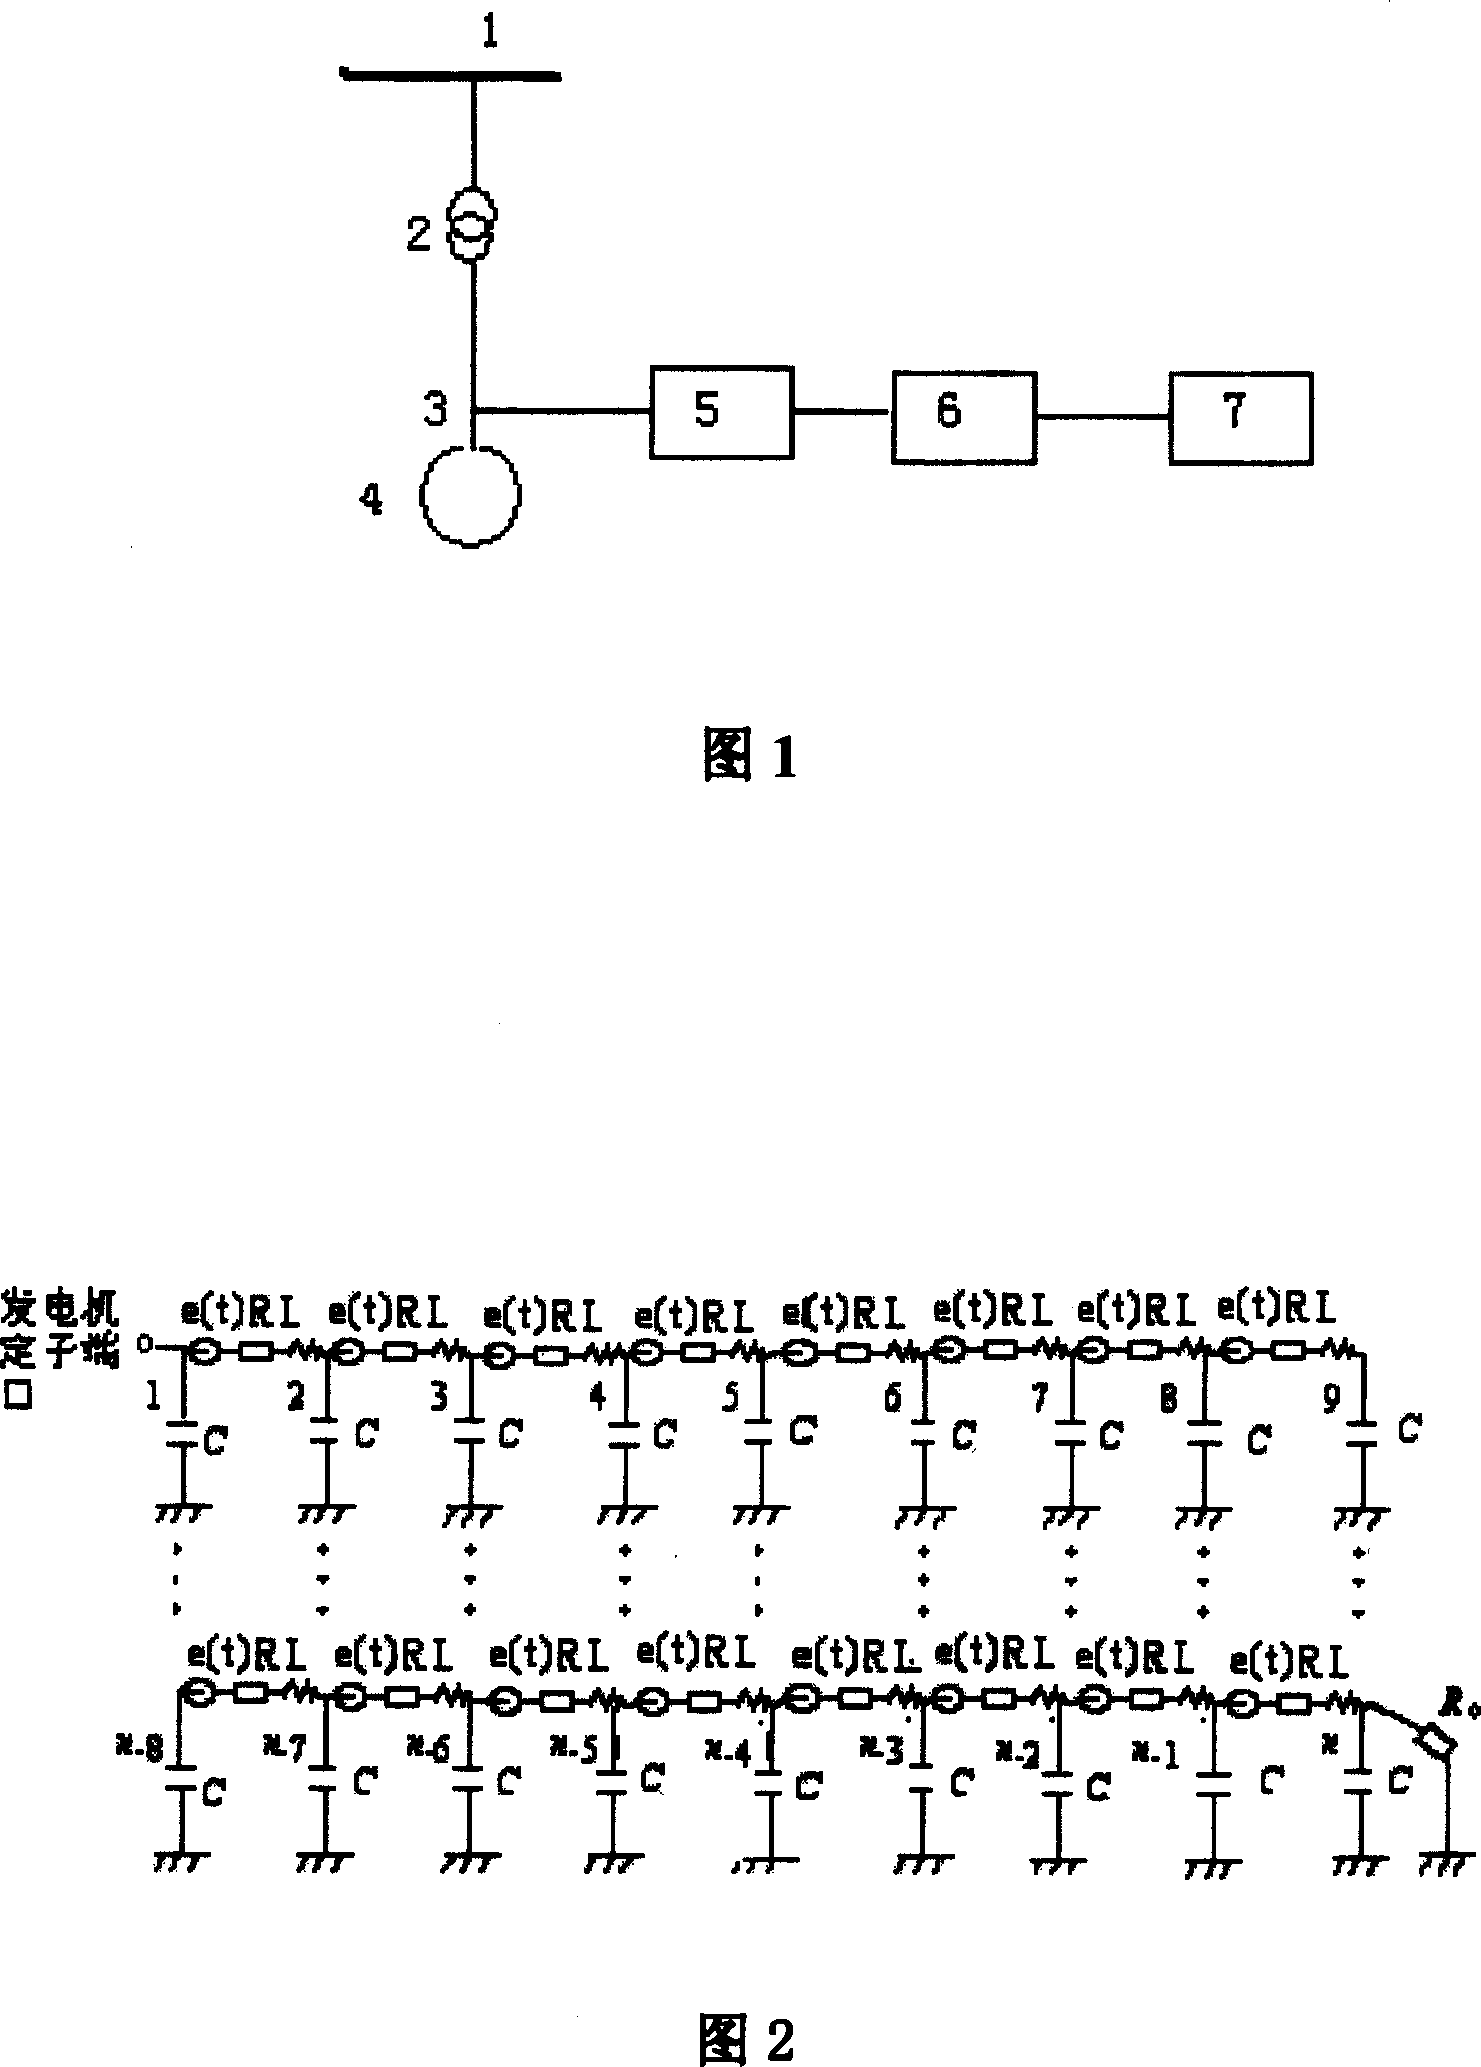 Method for predicting impulse over voltage of generator